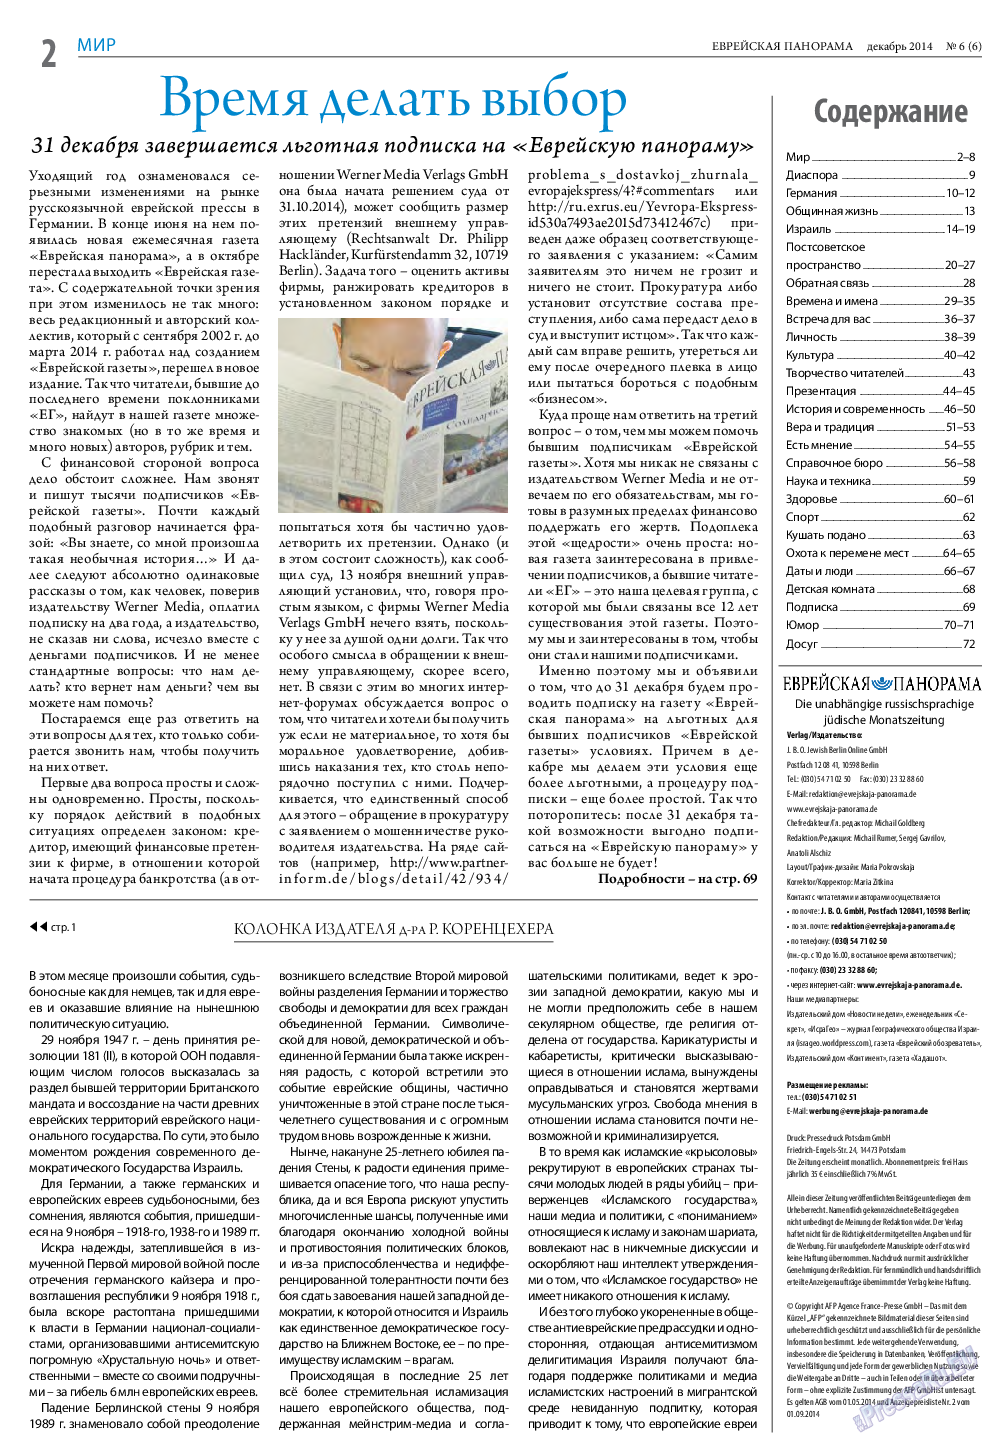 Еврейская панорама, газета. 2014 №6 стр.2